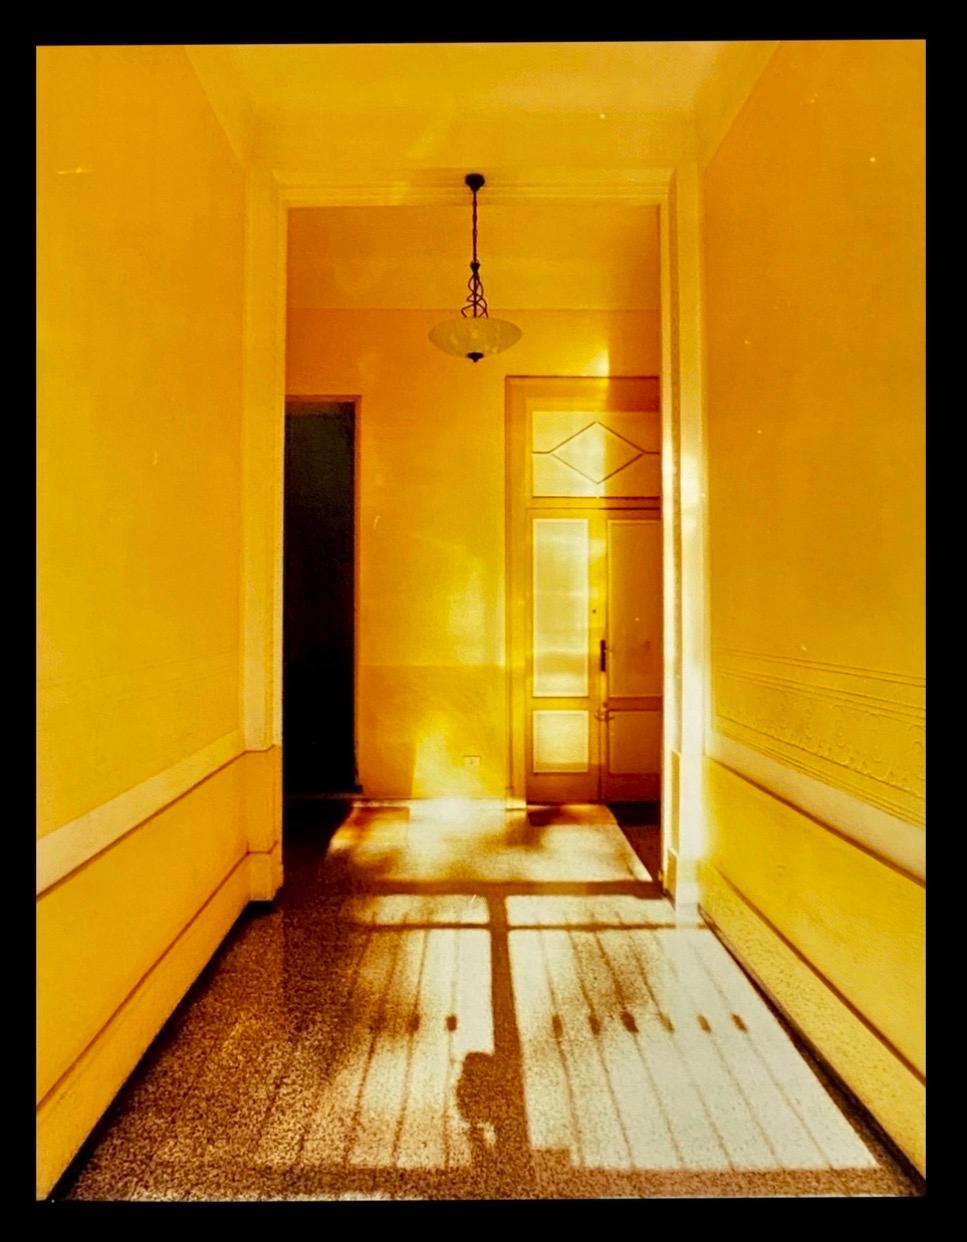 Yellow Corridor (Day), Milan - Italian architectural color photography